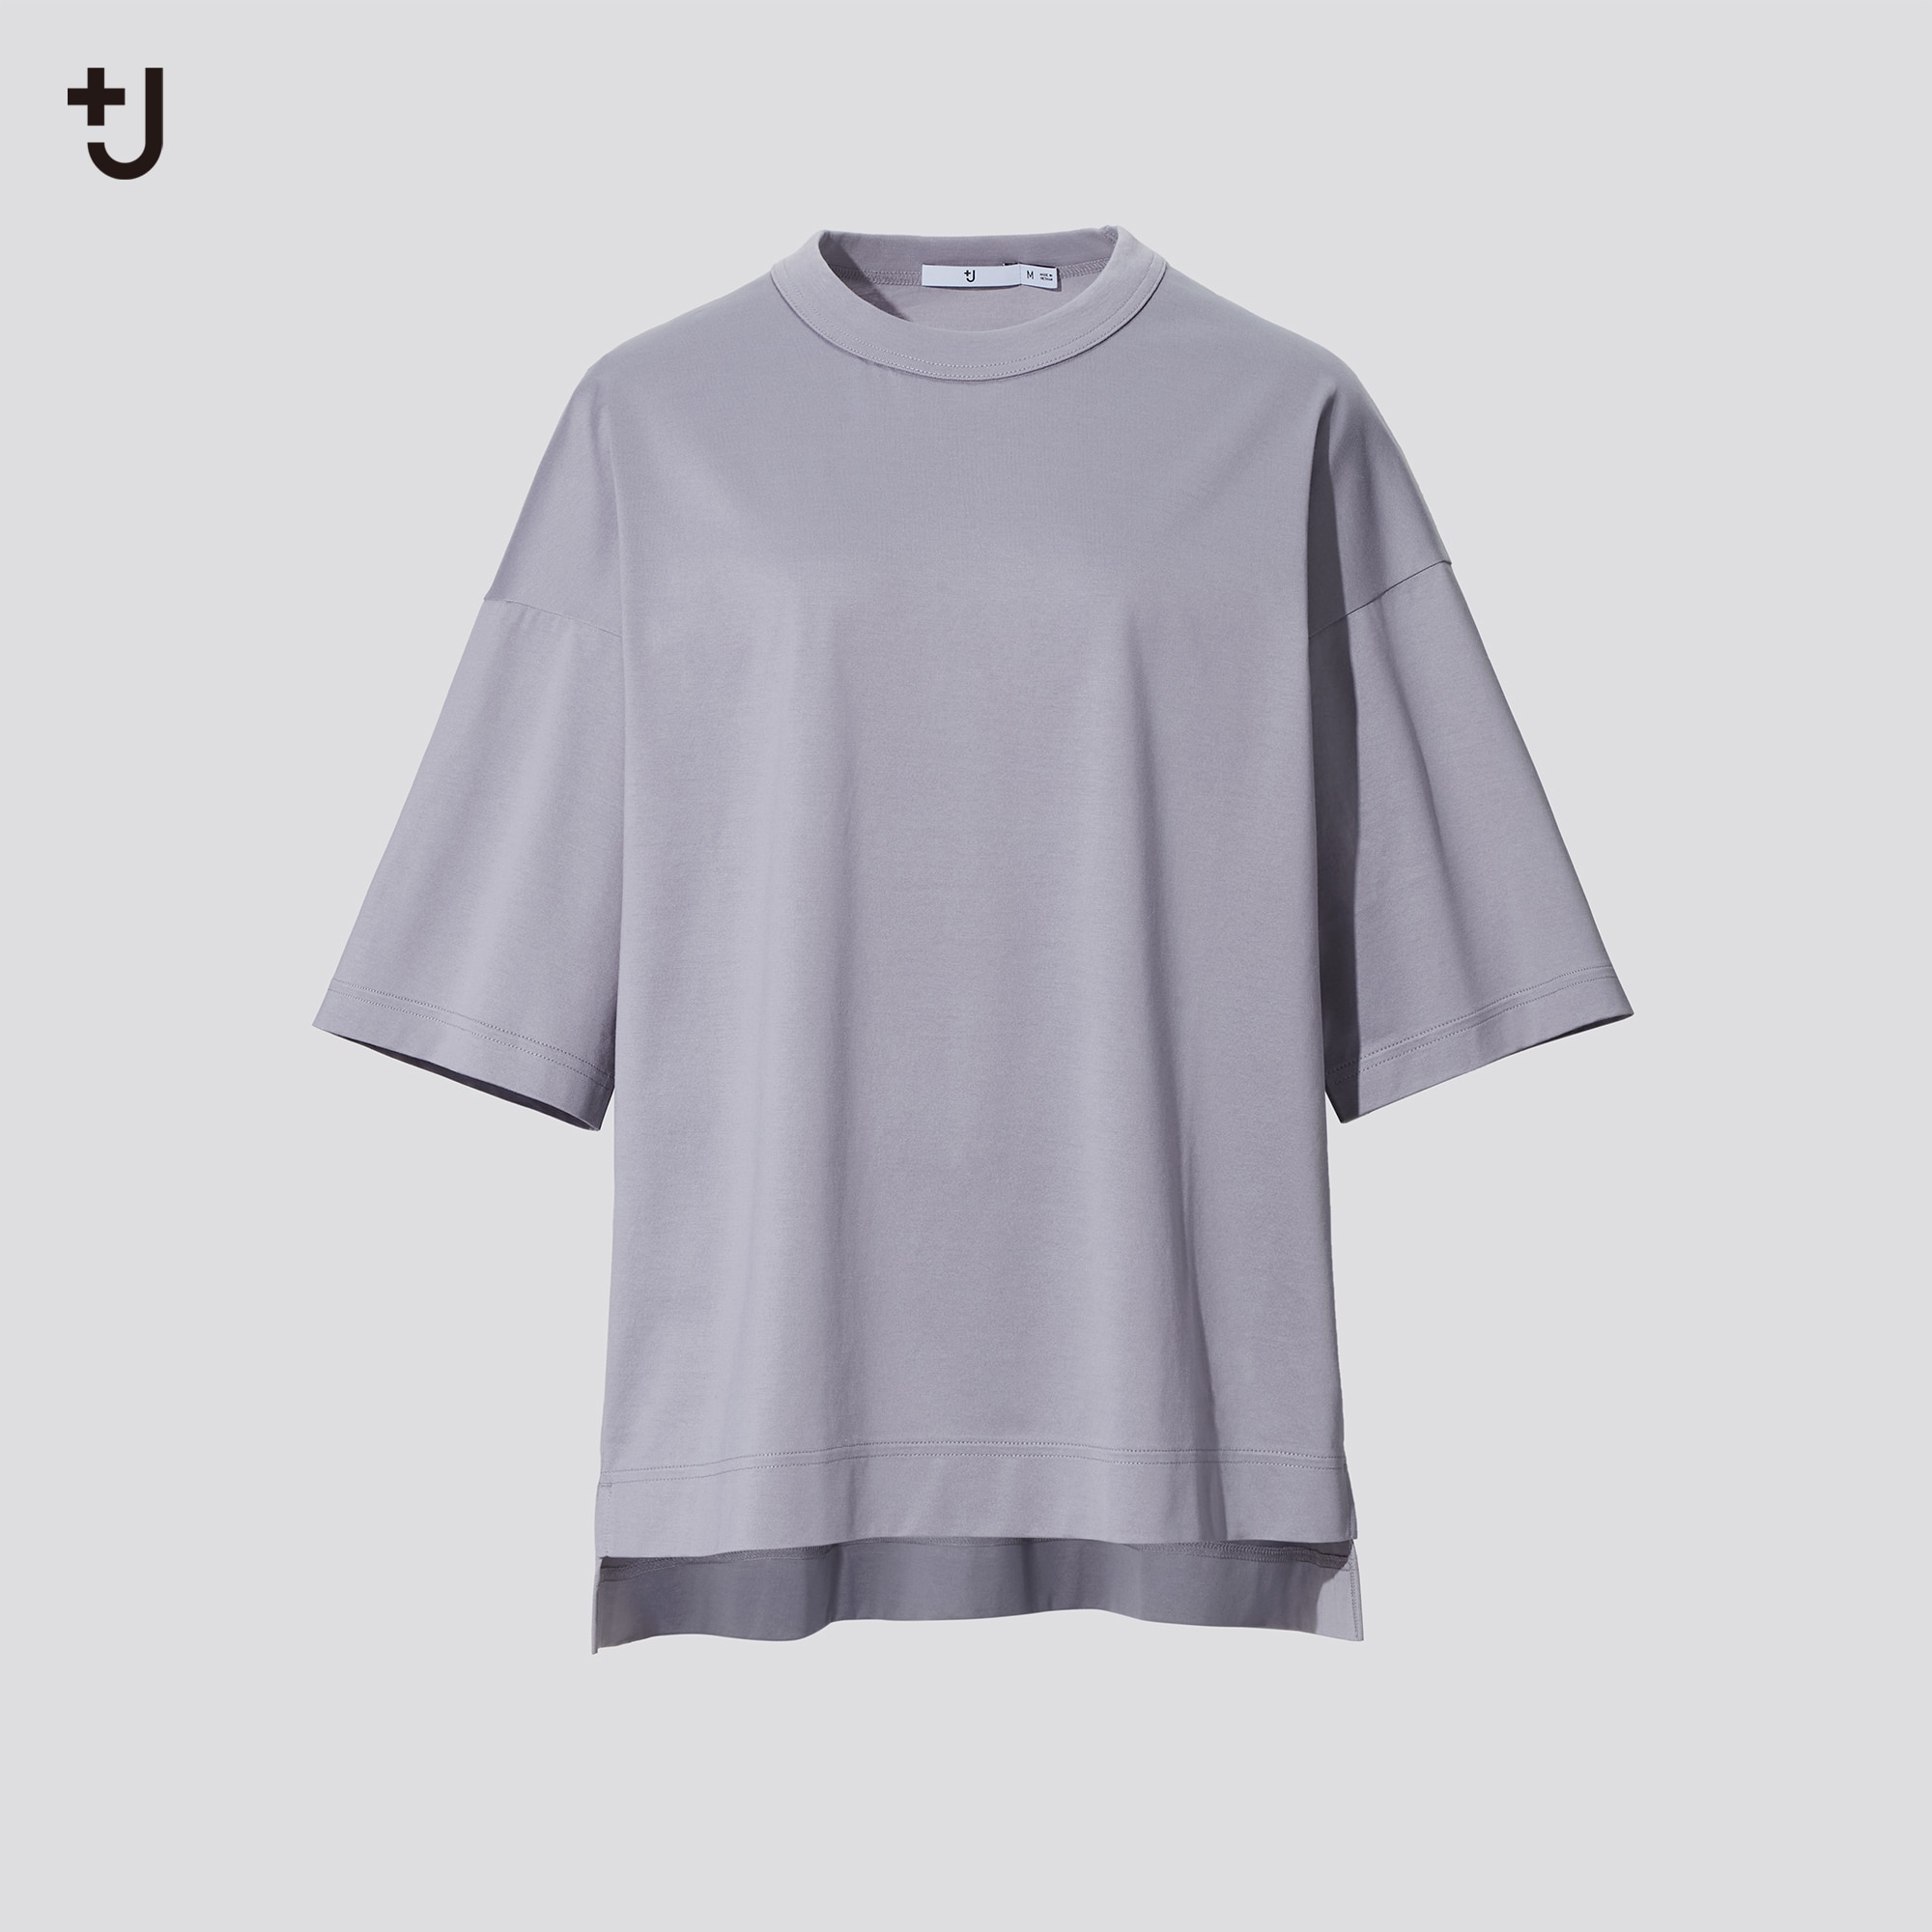 Uniqlo Oversized T Shirt Size Chart | lupon.gov.ph